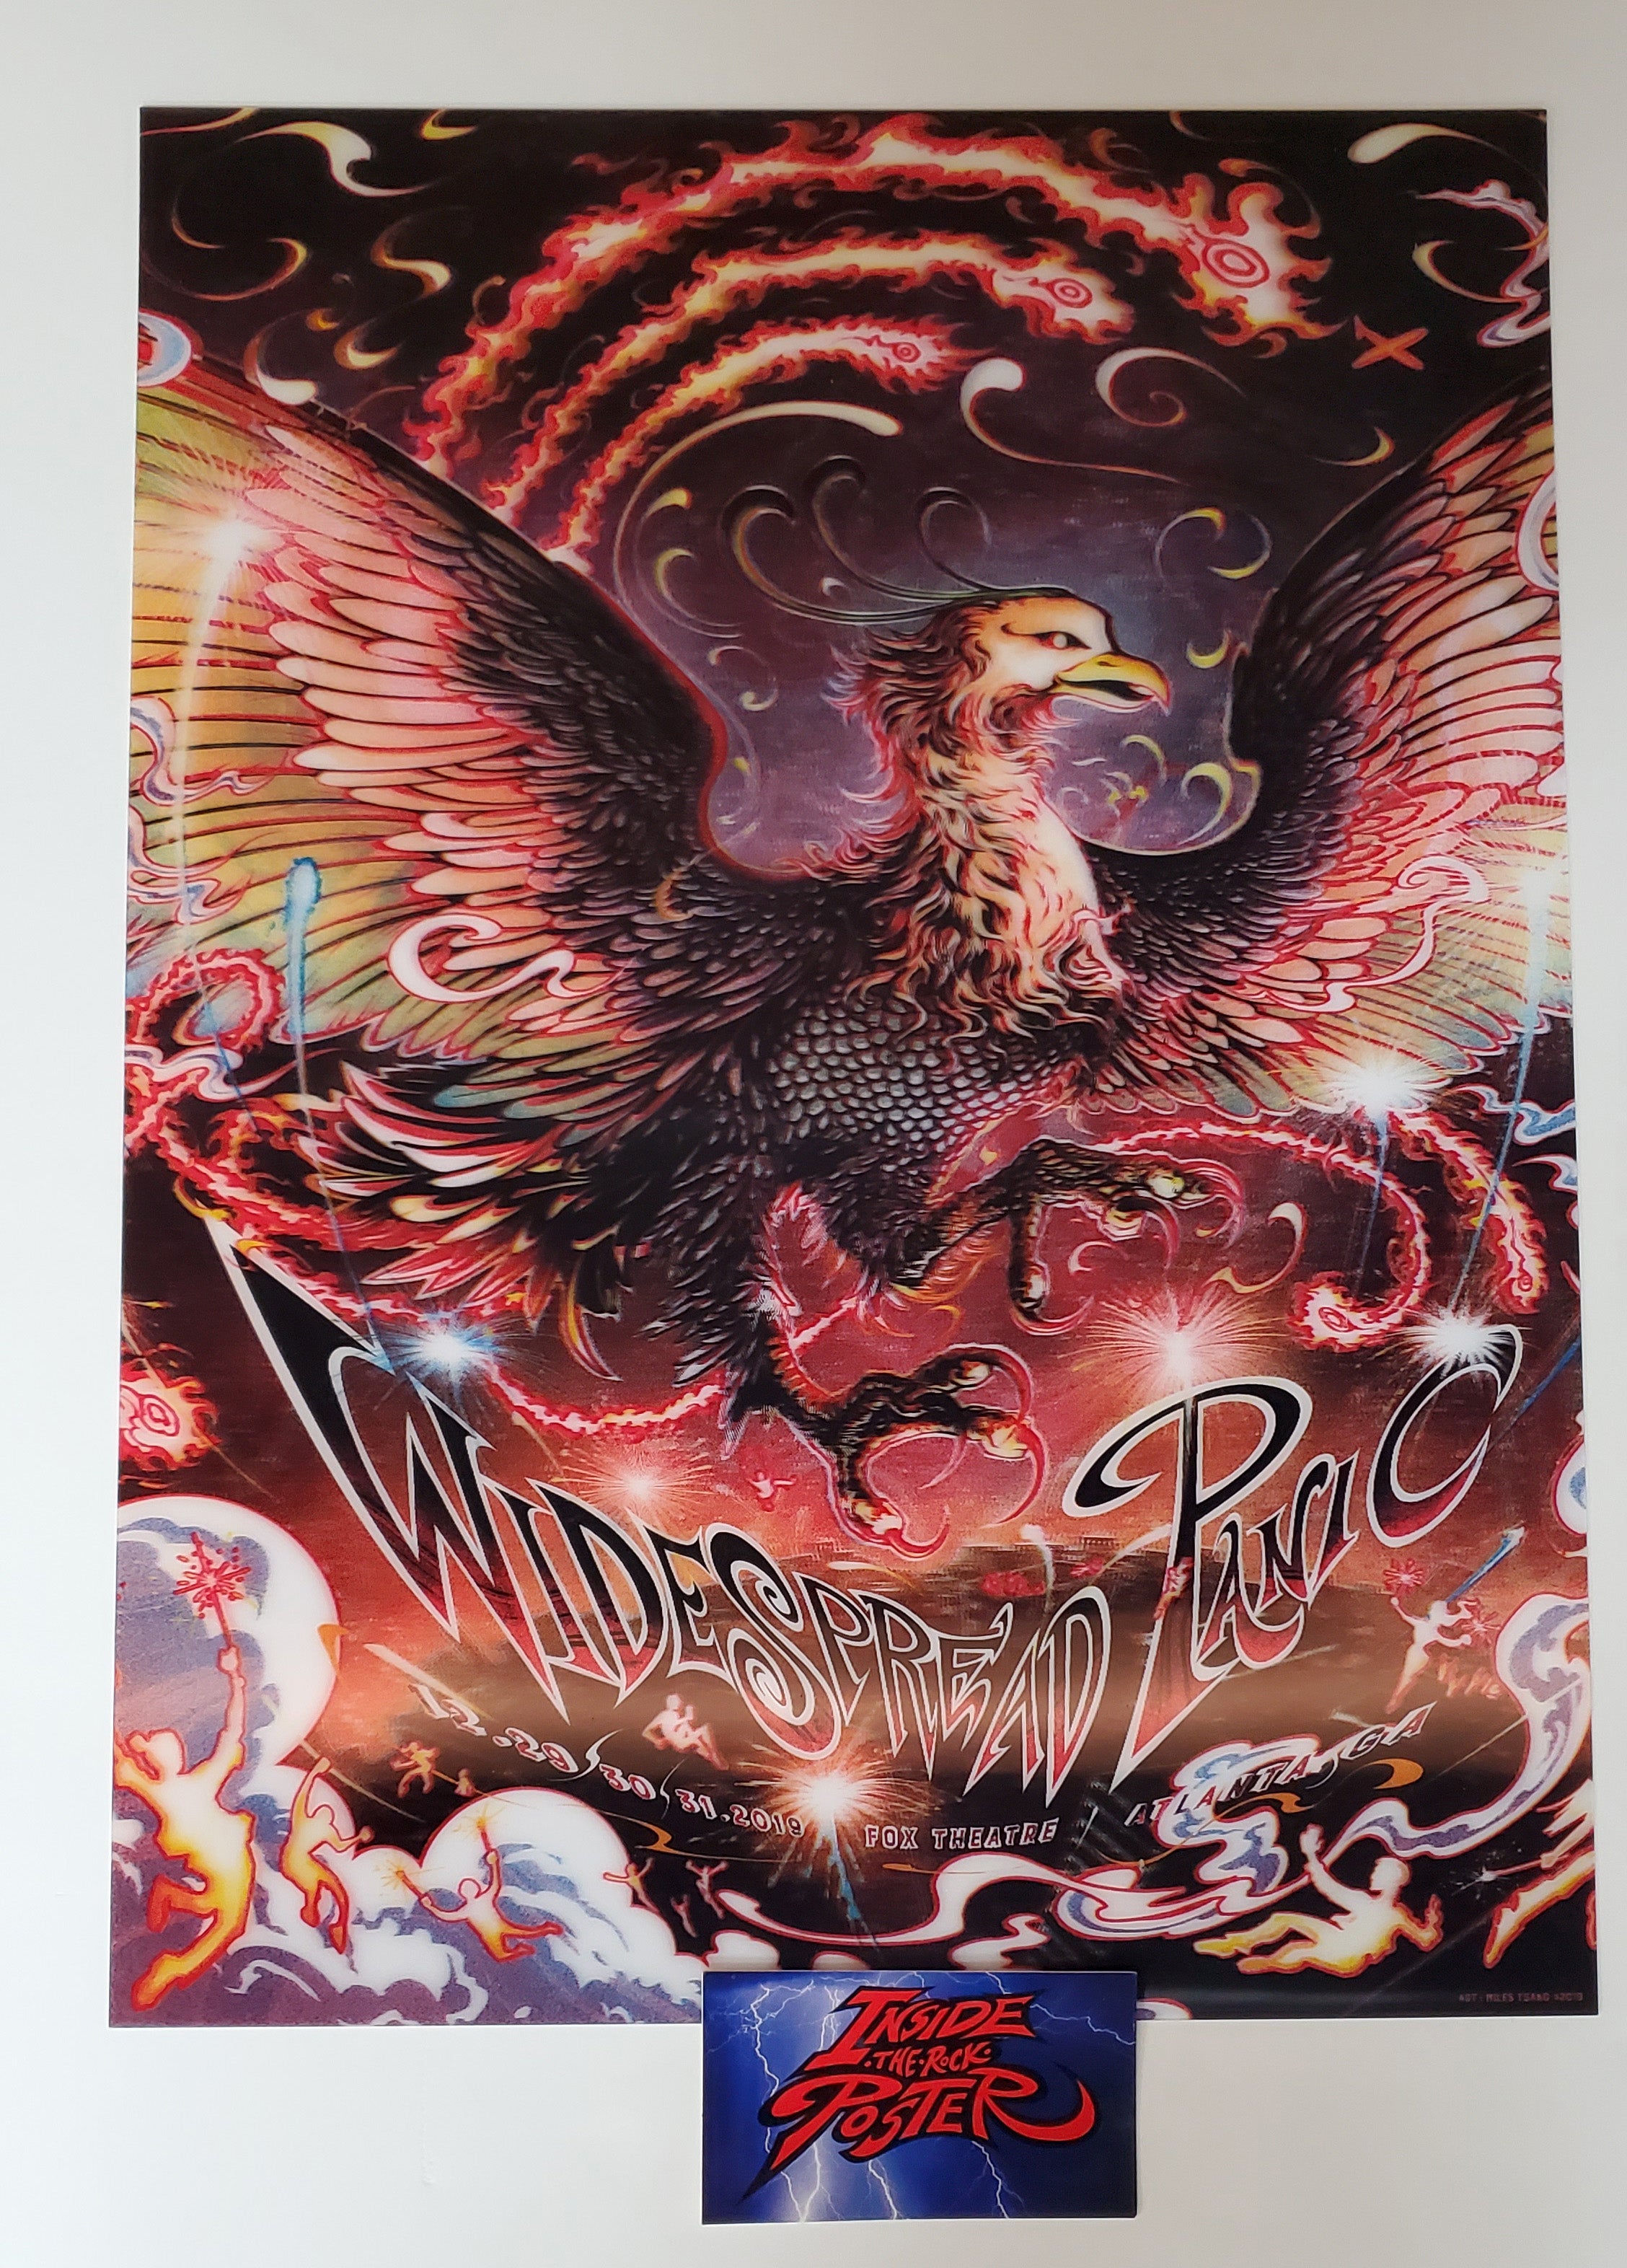 Miles Tsang Widespread Panic Atlanta Poster 2019 New Years Eve Inside